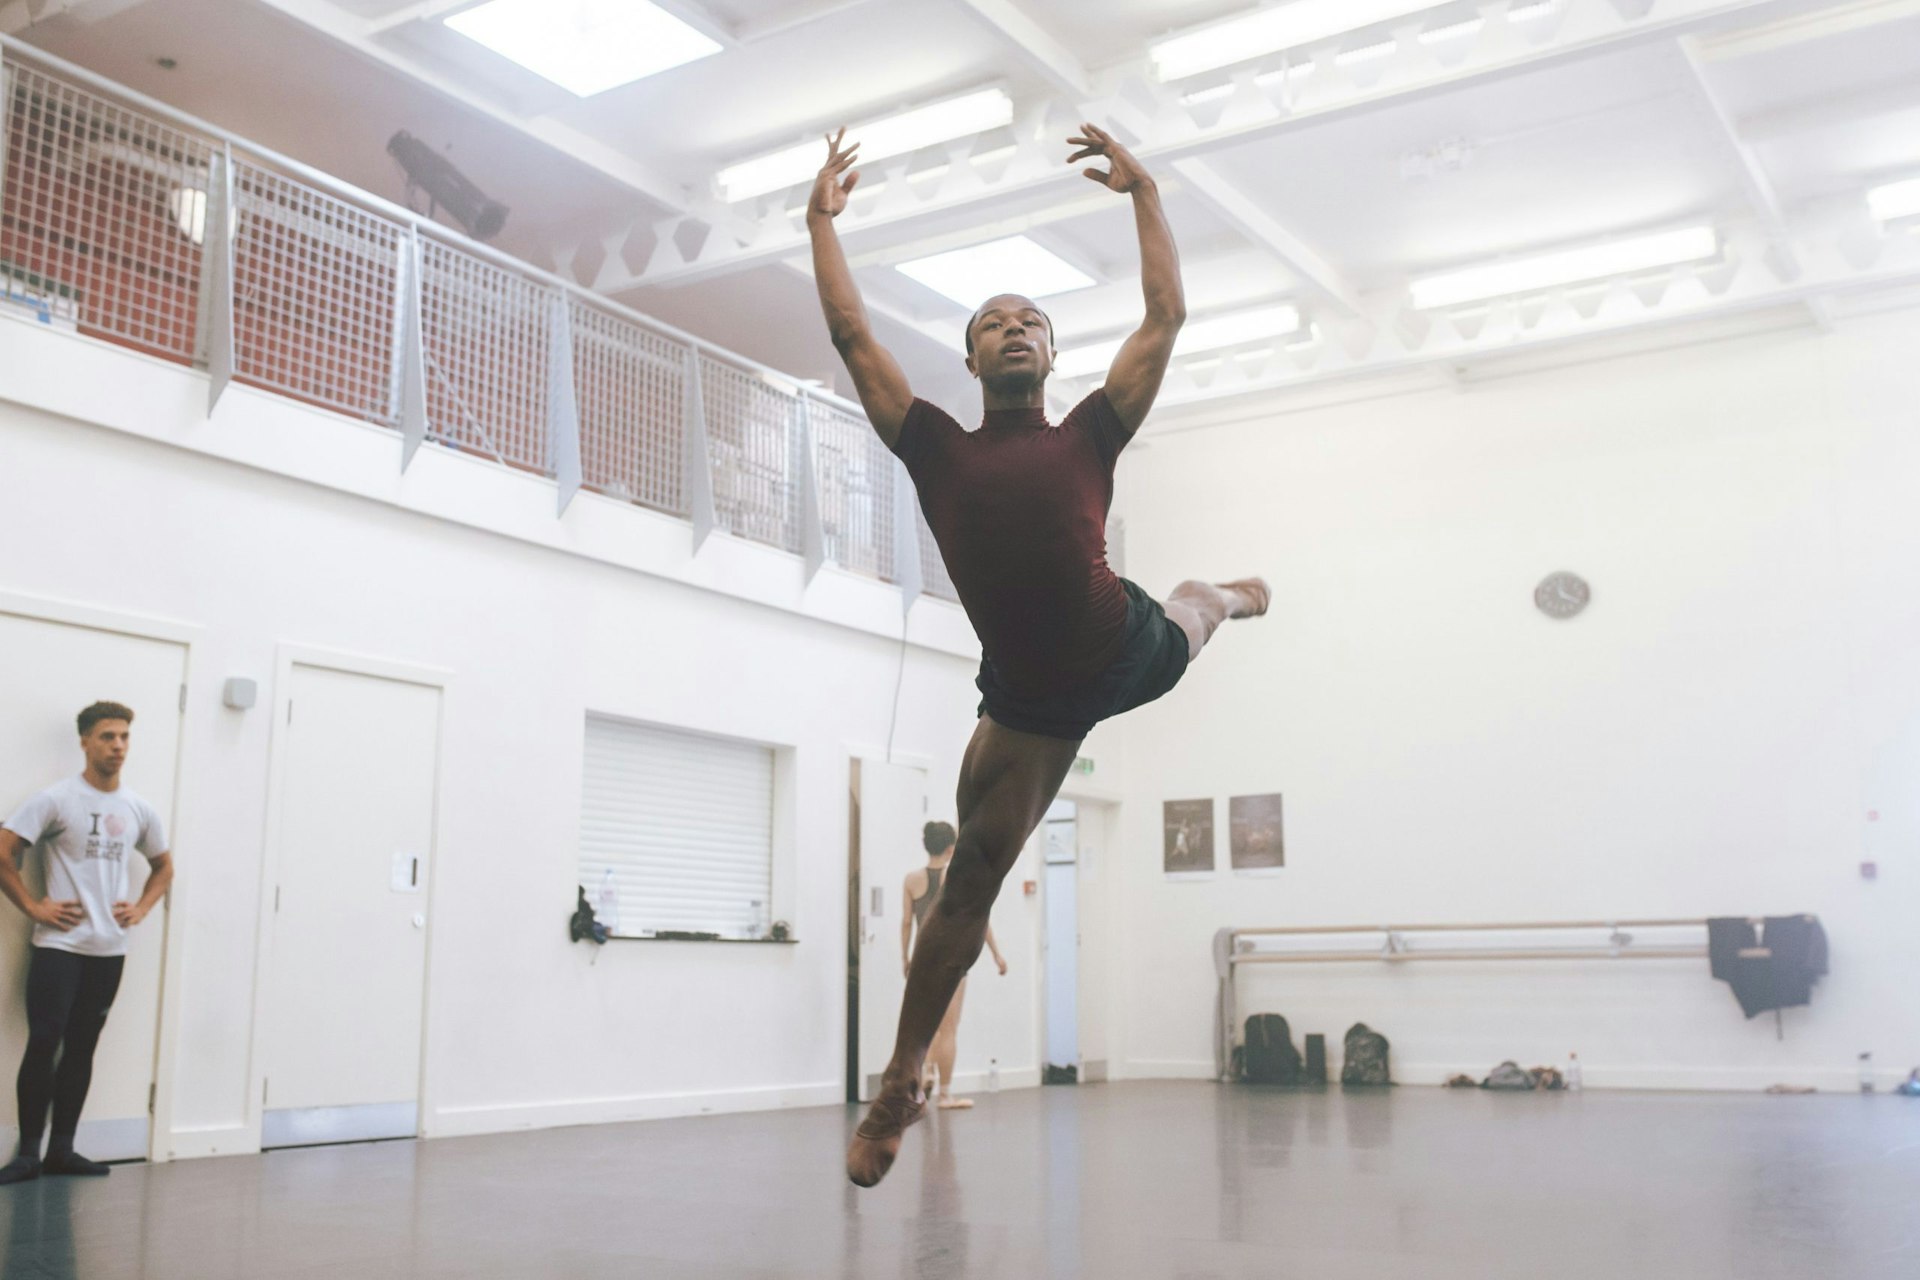 The Black ballet dancers taking on industry racism